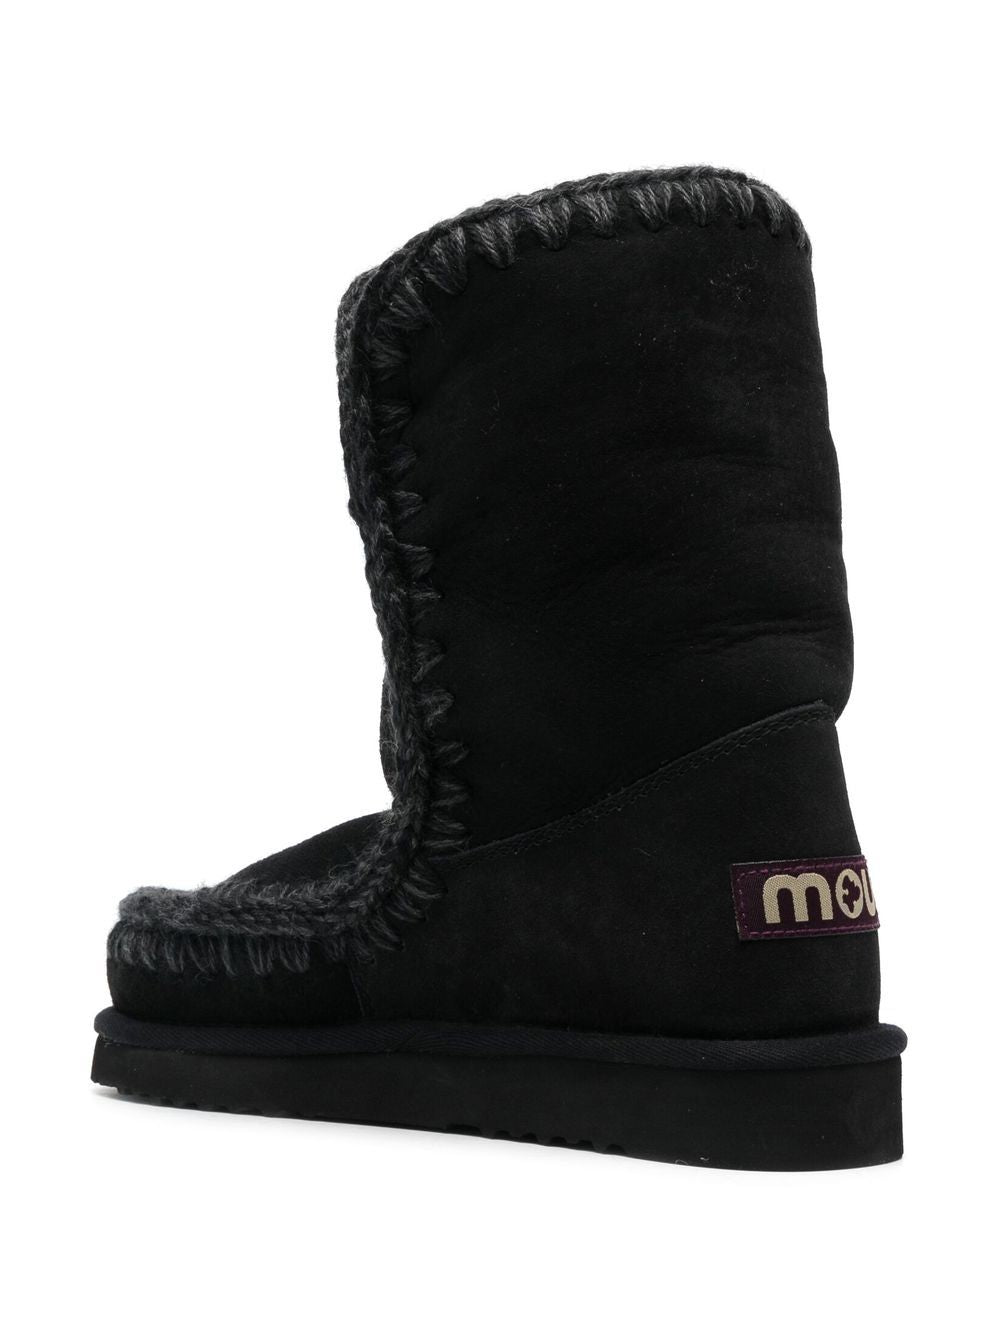 Mou Boots Black